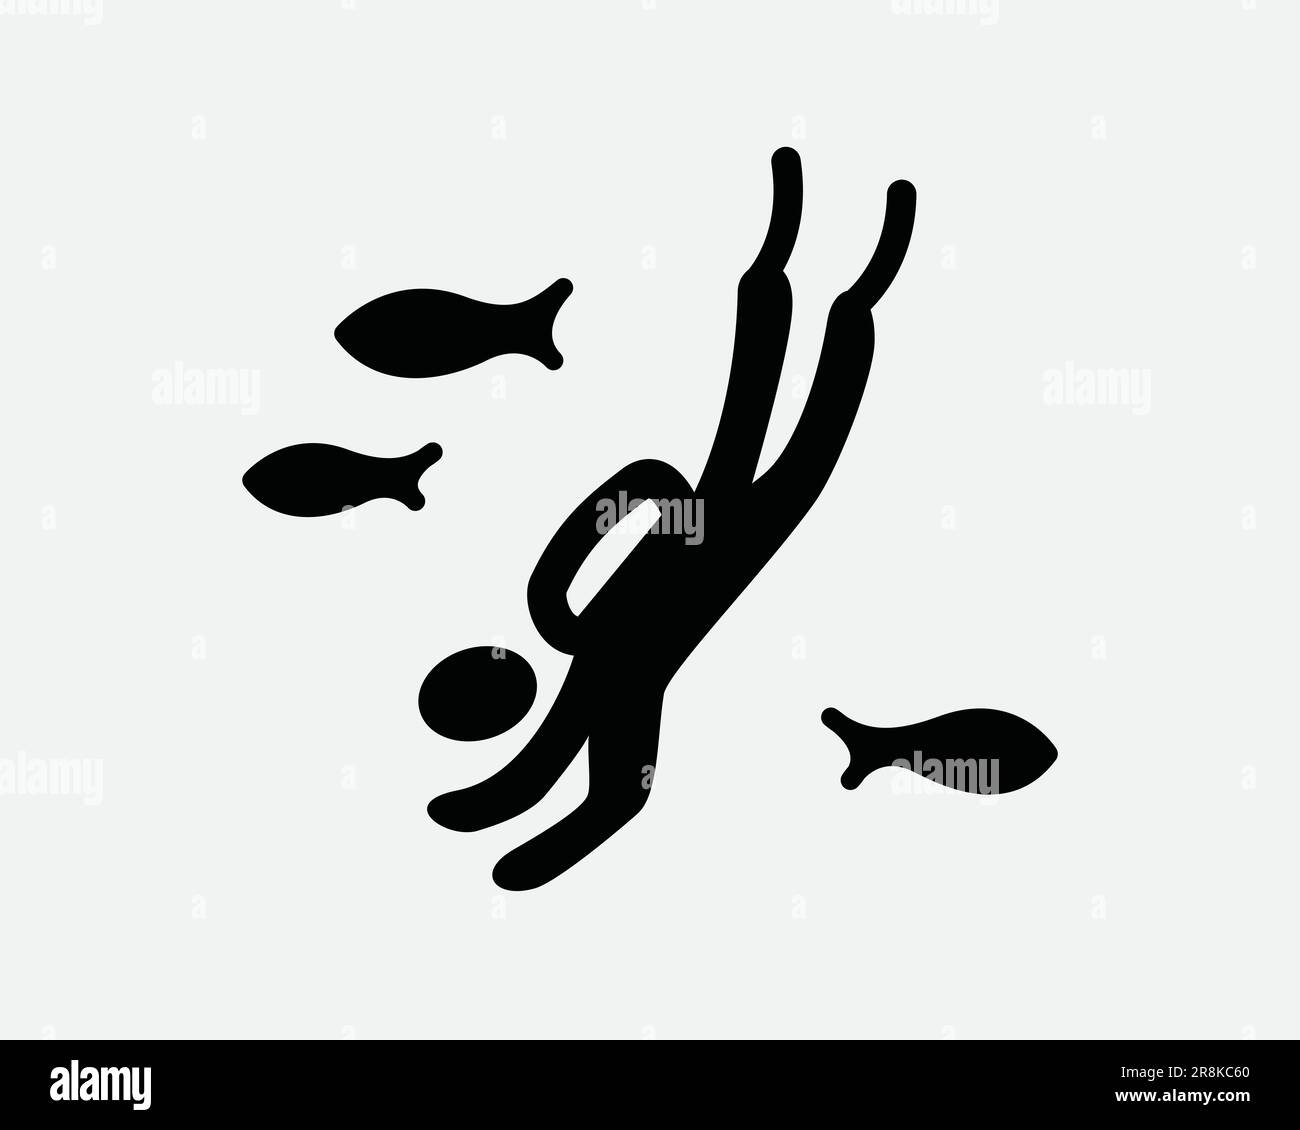 Underwater Dive Icon. Man SCUBA Diving Diver Underwater Sea Ocean Fish Marine Black White Sign Symbol Illustration Artwork Graphic Clipart EPS Vector Stock Vector